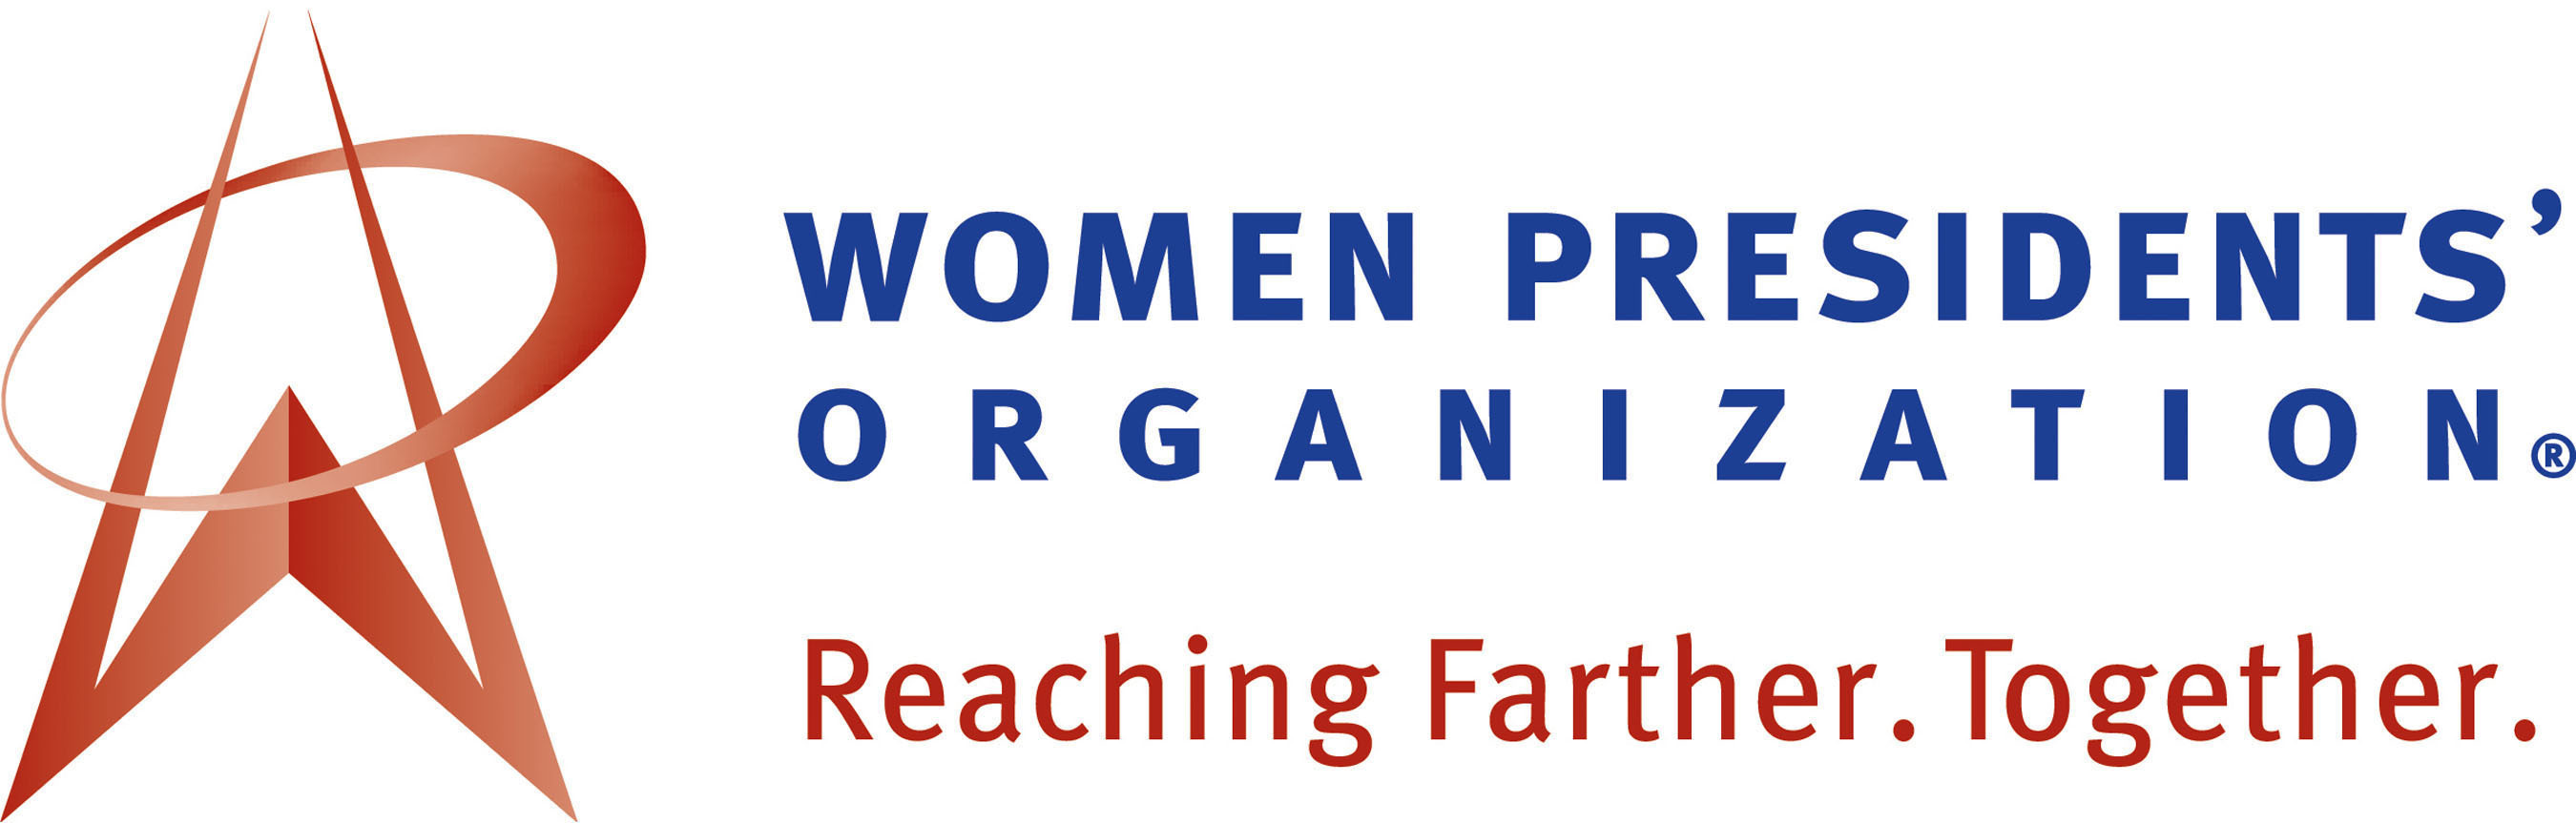 Women Presidents' Organization logo. (PRNewsFoto/Women Presidents' Organization) (PRNewsFoto/Women Presidents' Organization)